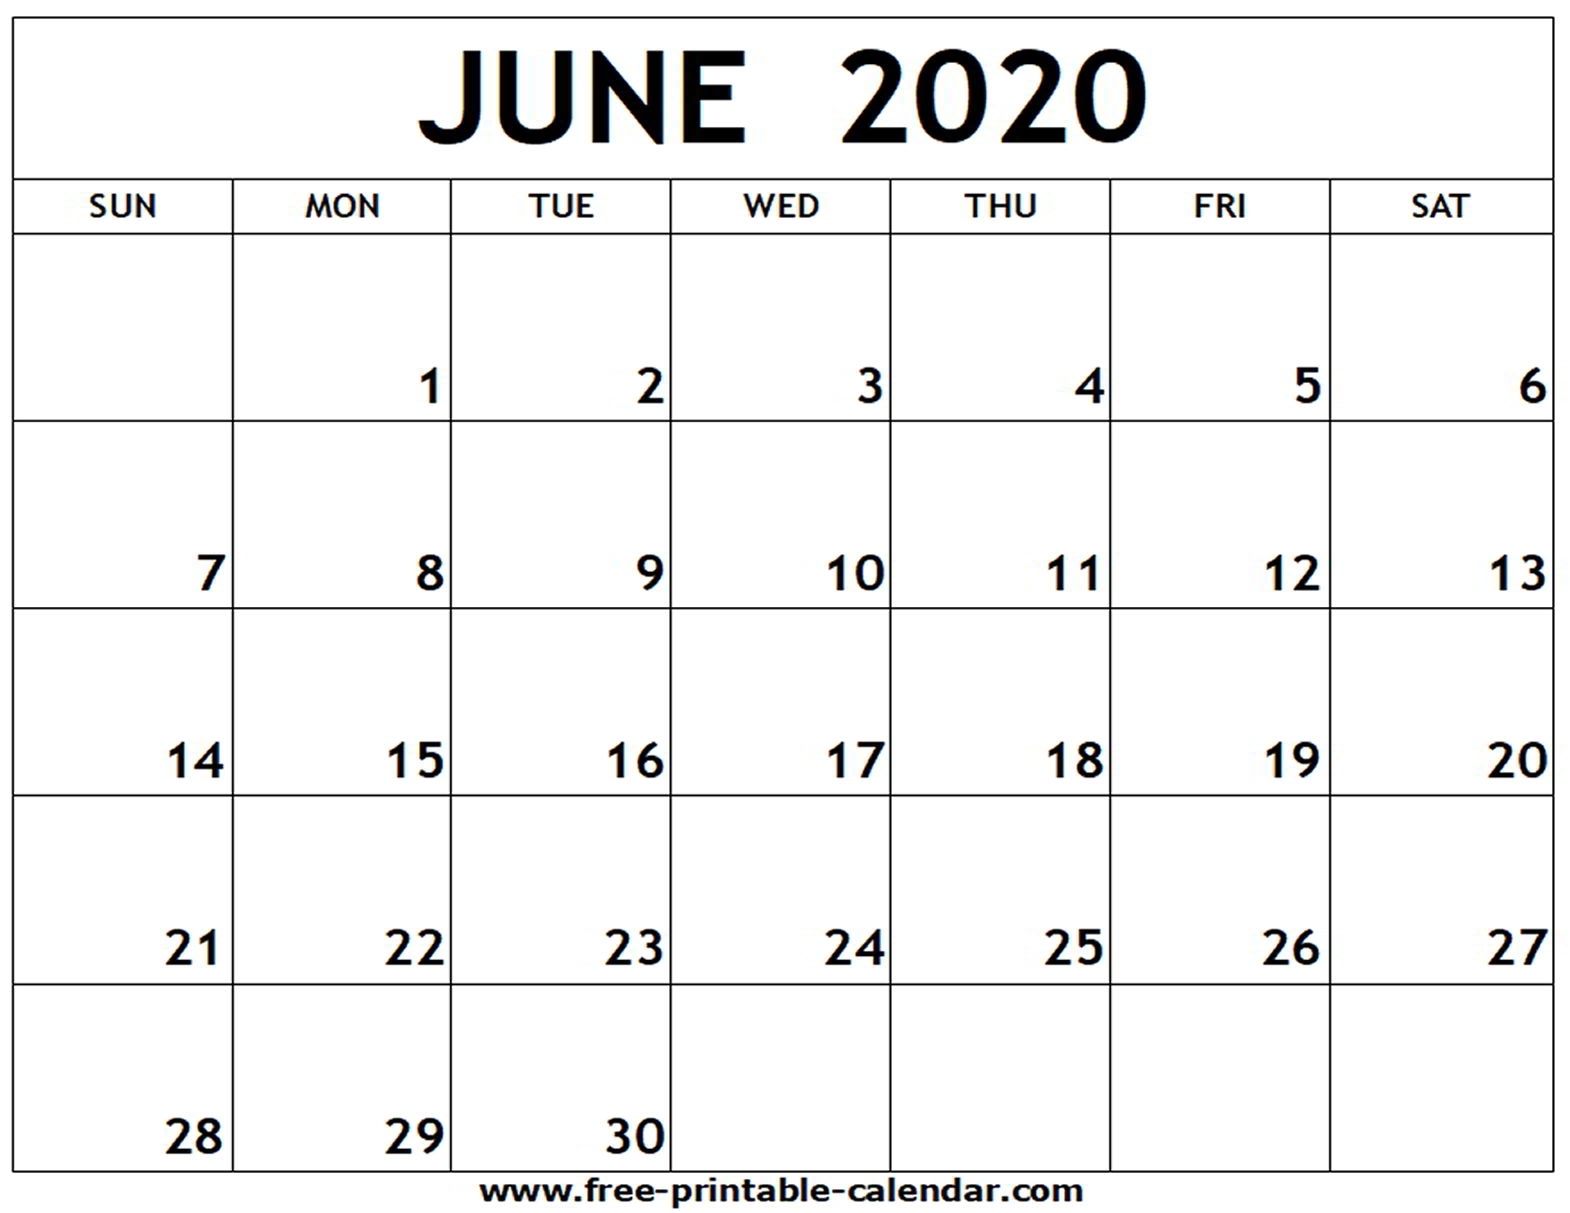 June 2020 Printable Calendar - Free-Printable-Calendar